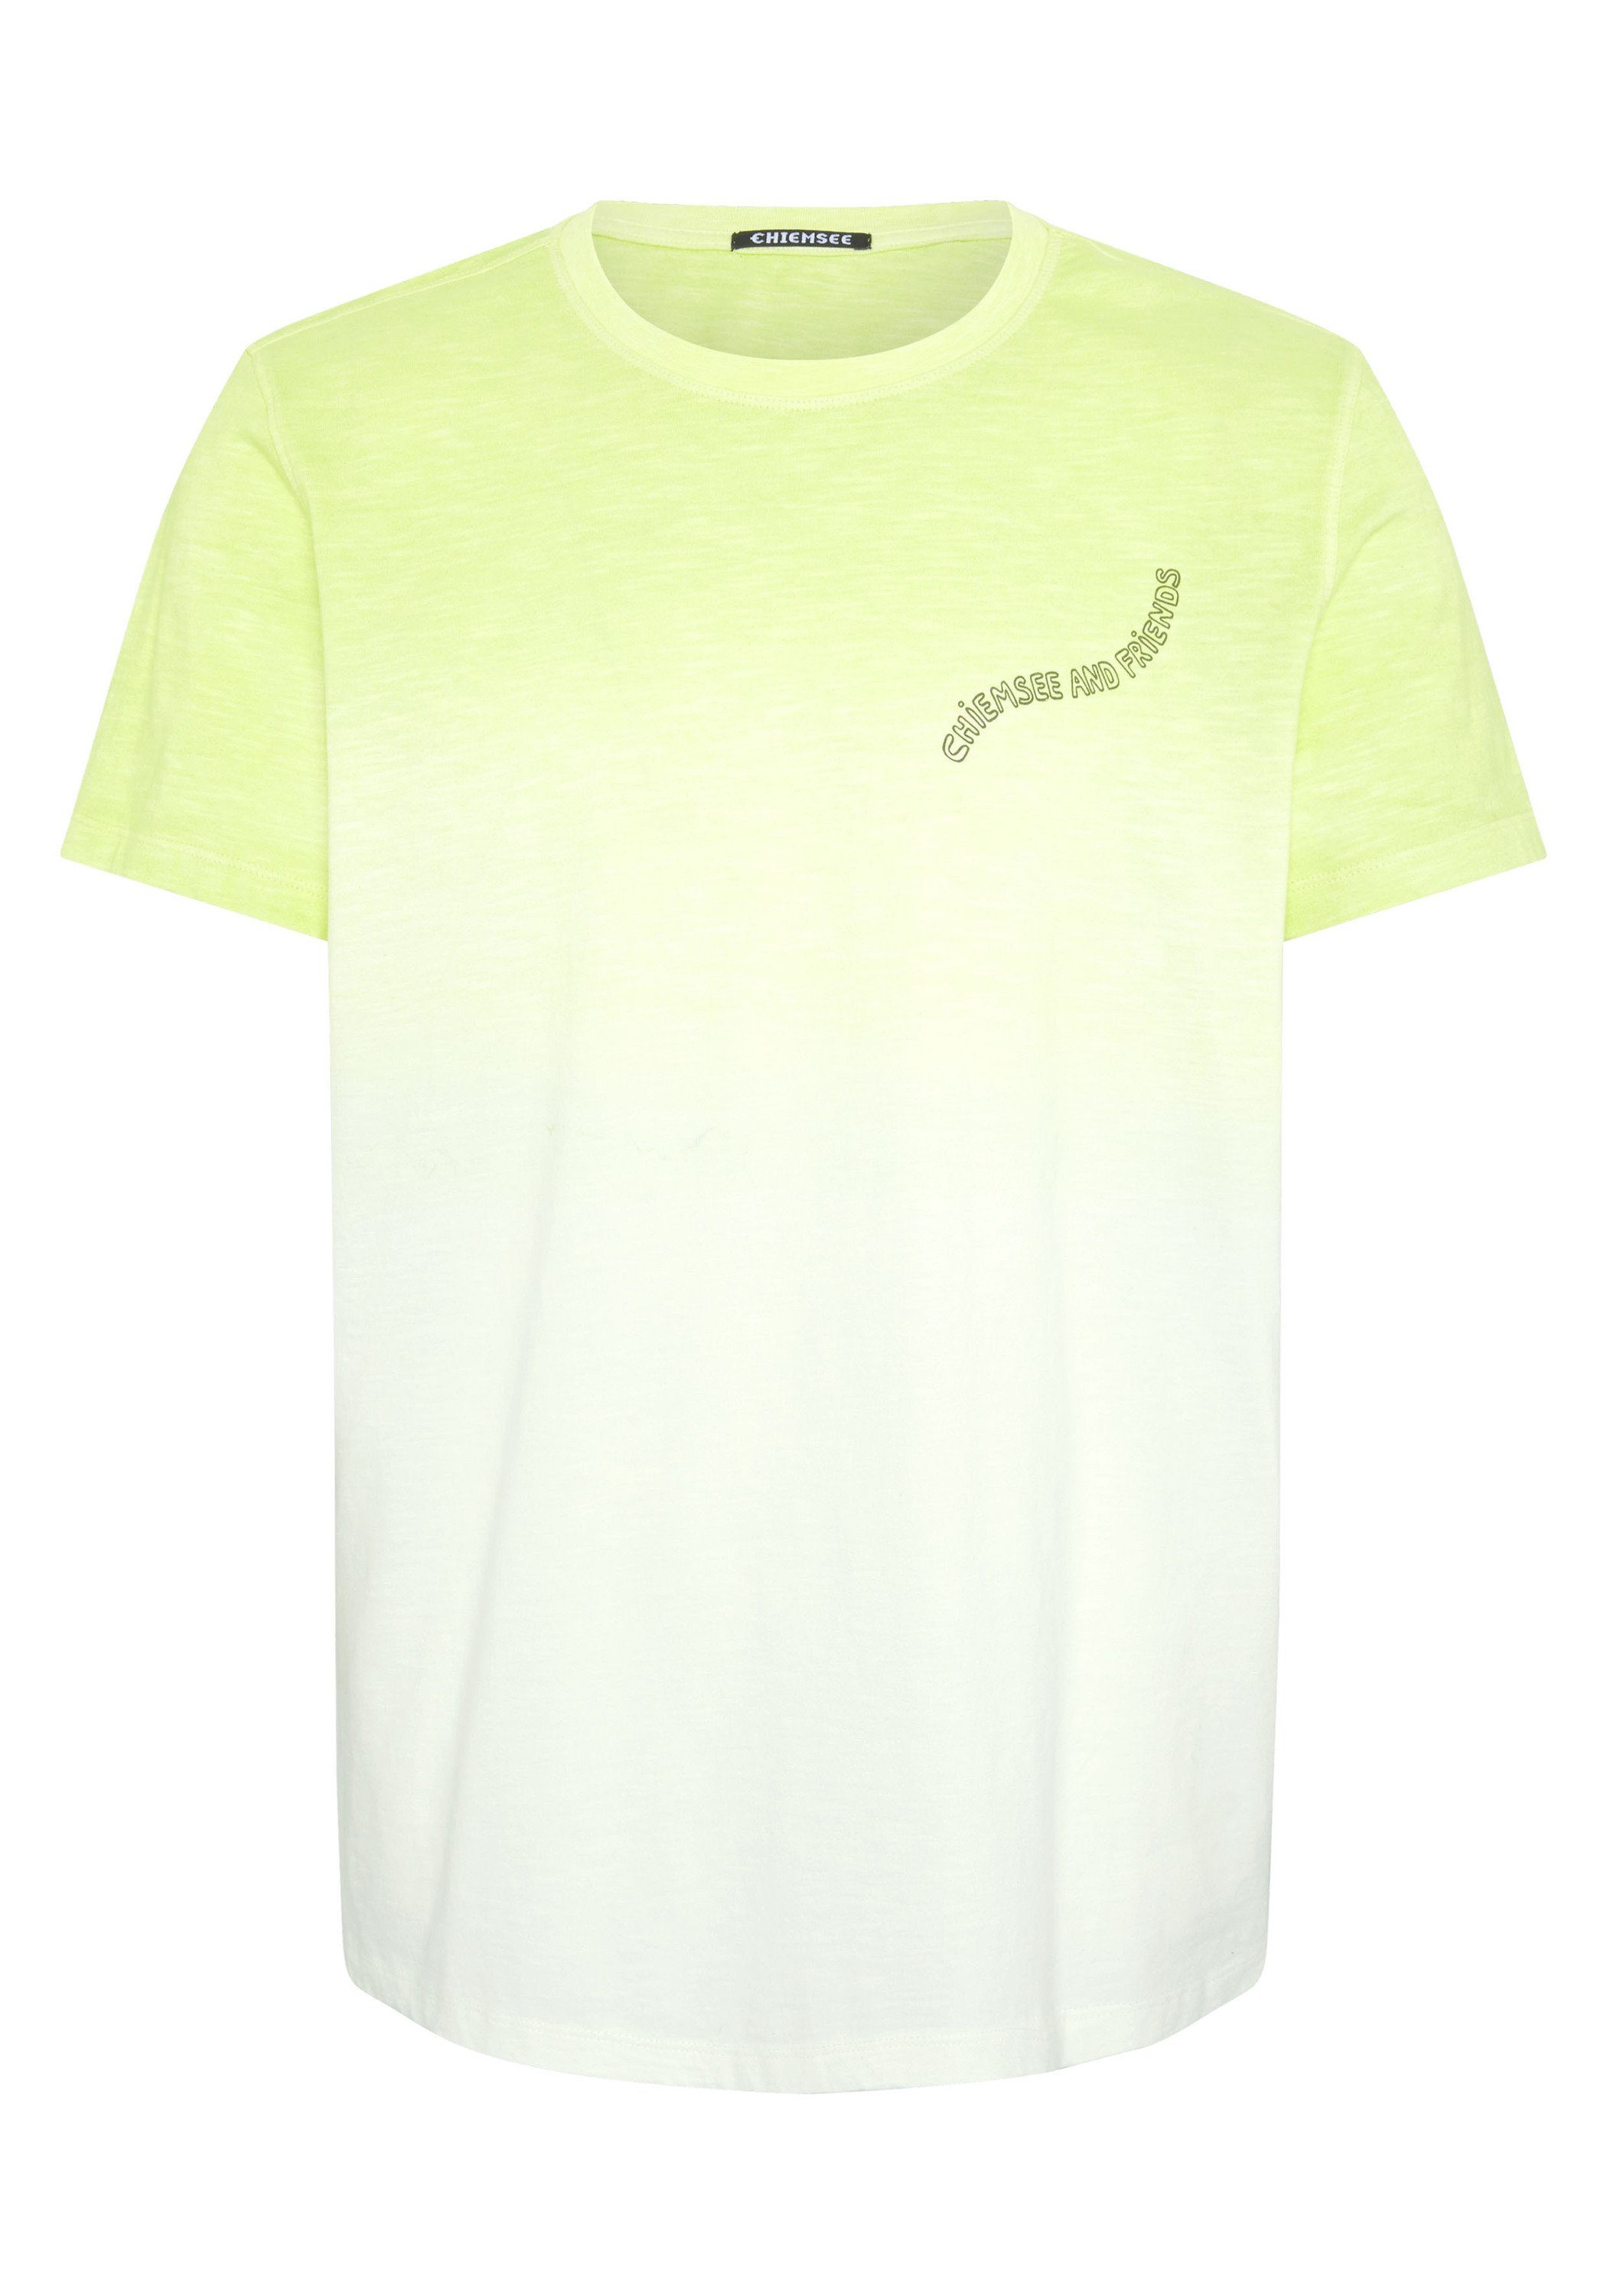 Chiemsee Print-Shirt T-Shirt im Farbverlauf mit Slub-Yarn-Textur 1 6268 Light Green/Dark Green